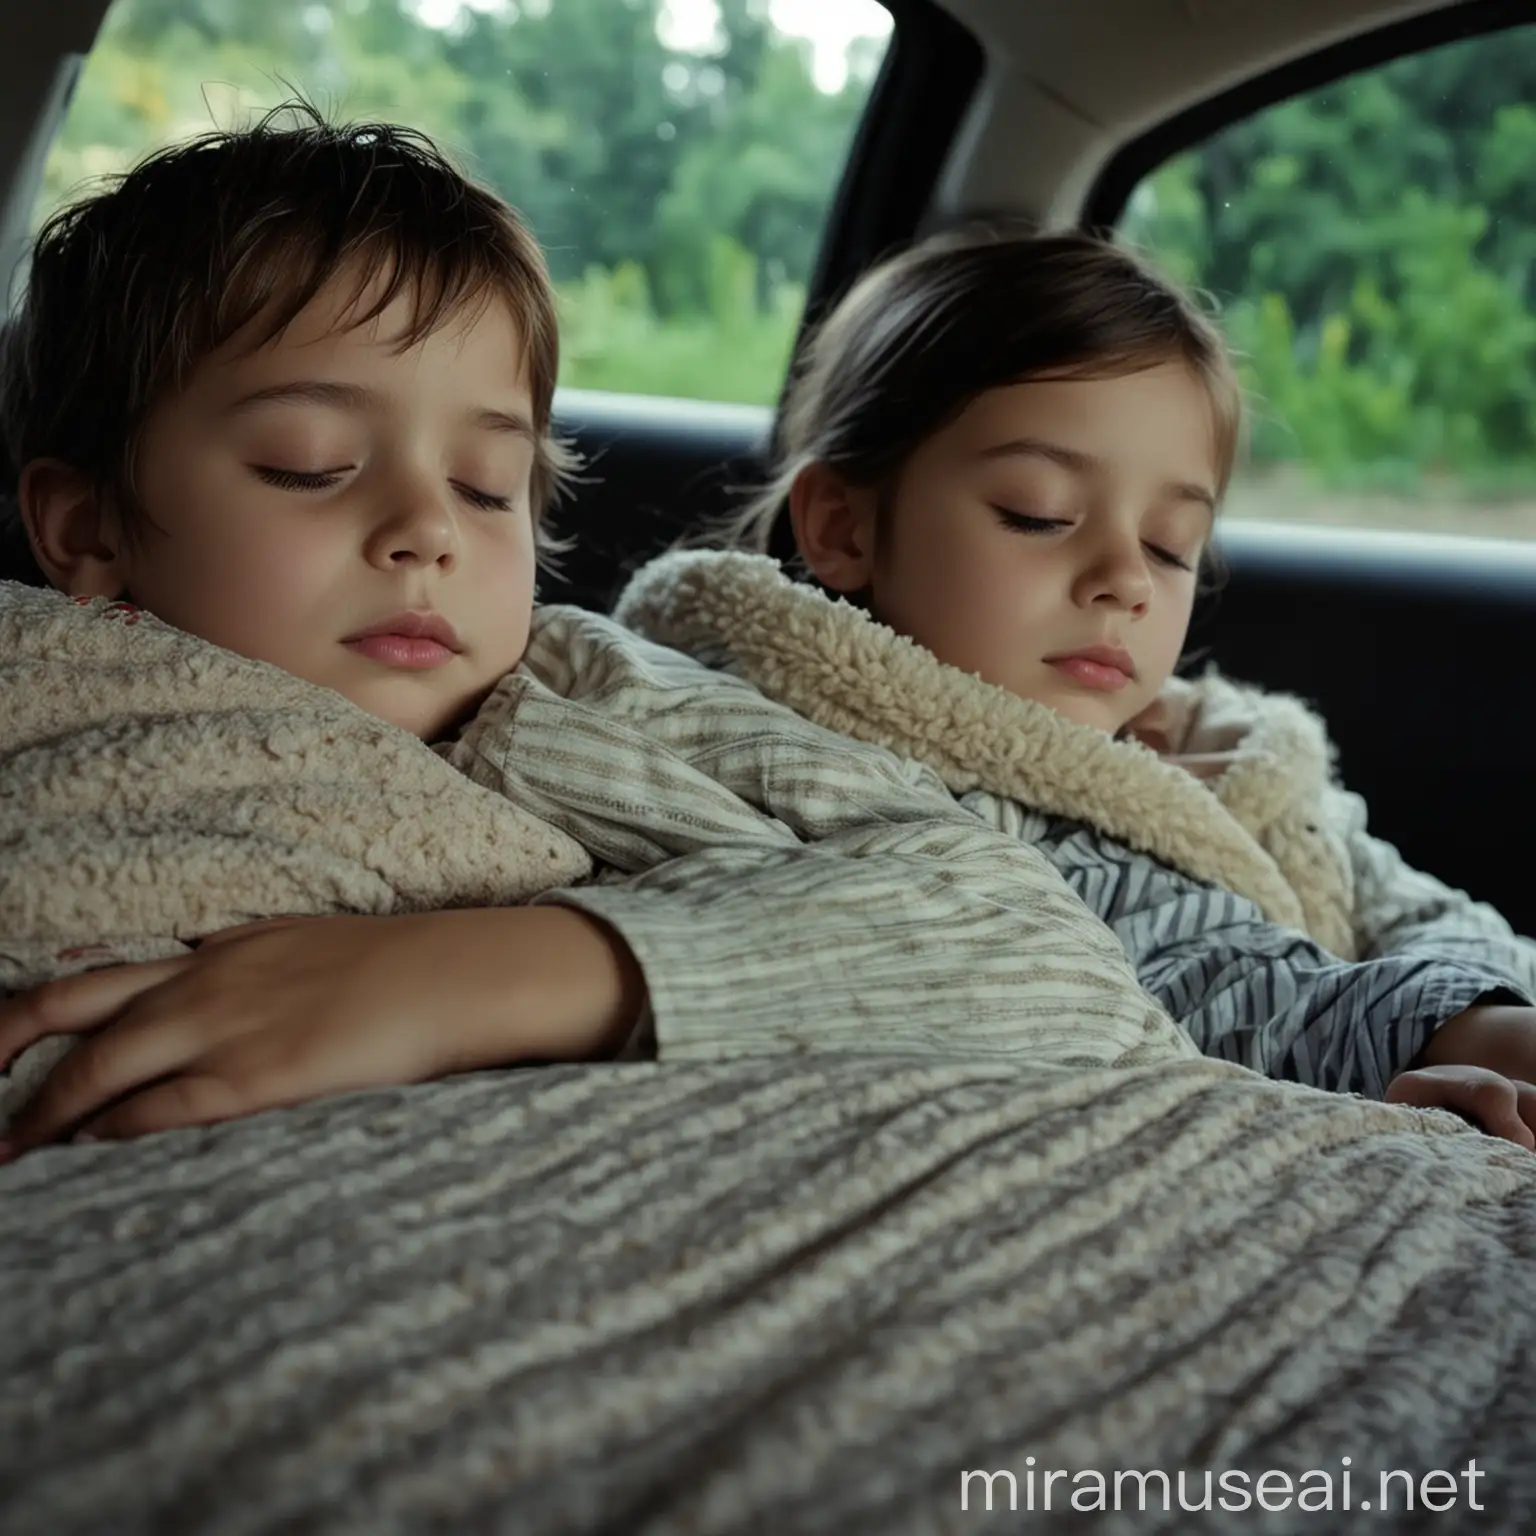 Children Sleeping Quietly in Car Peaceful Long Shot